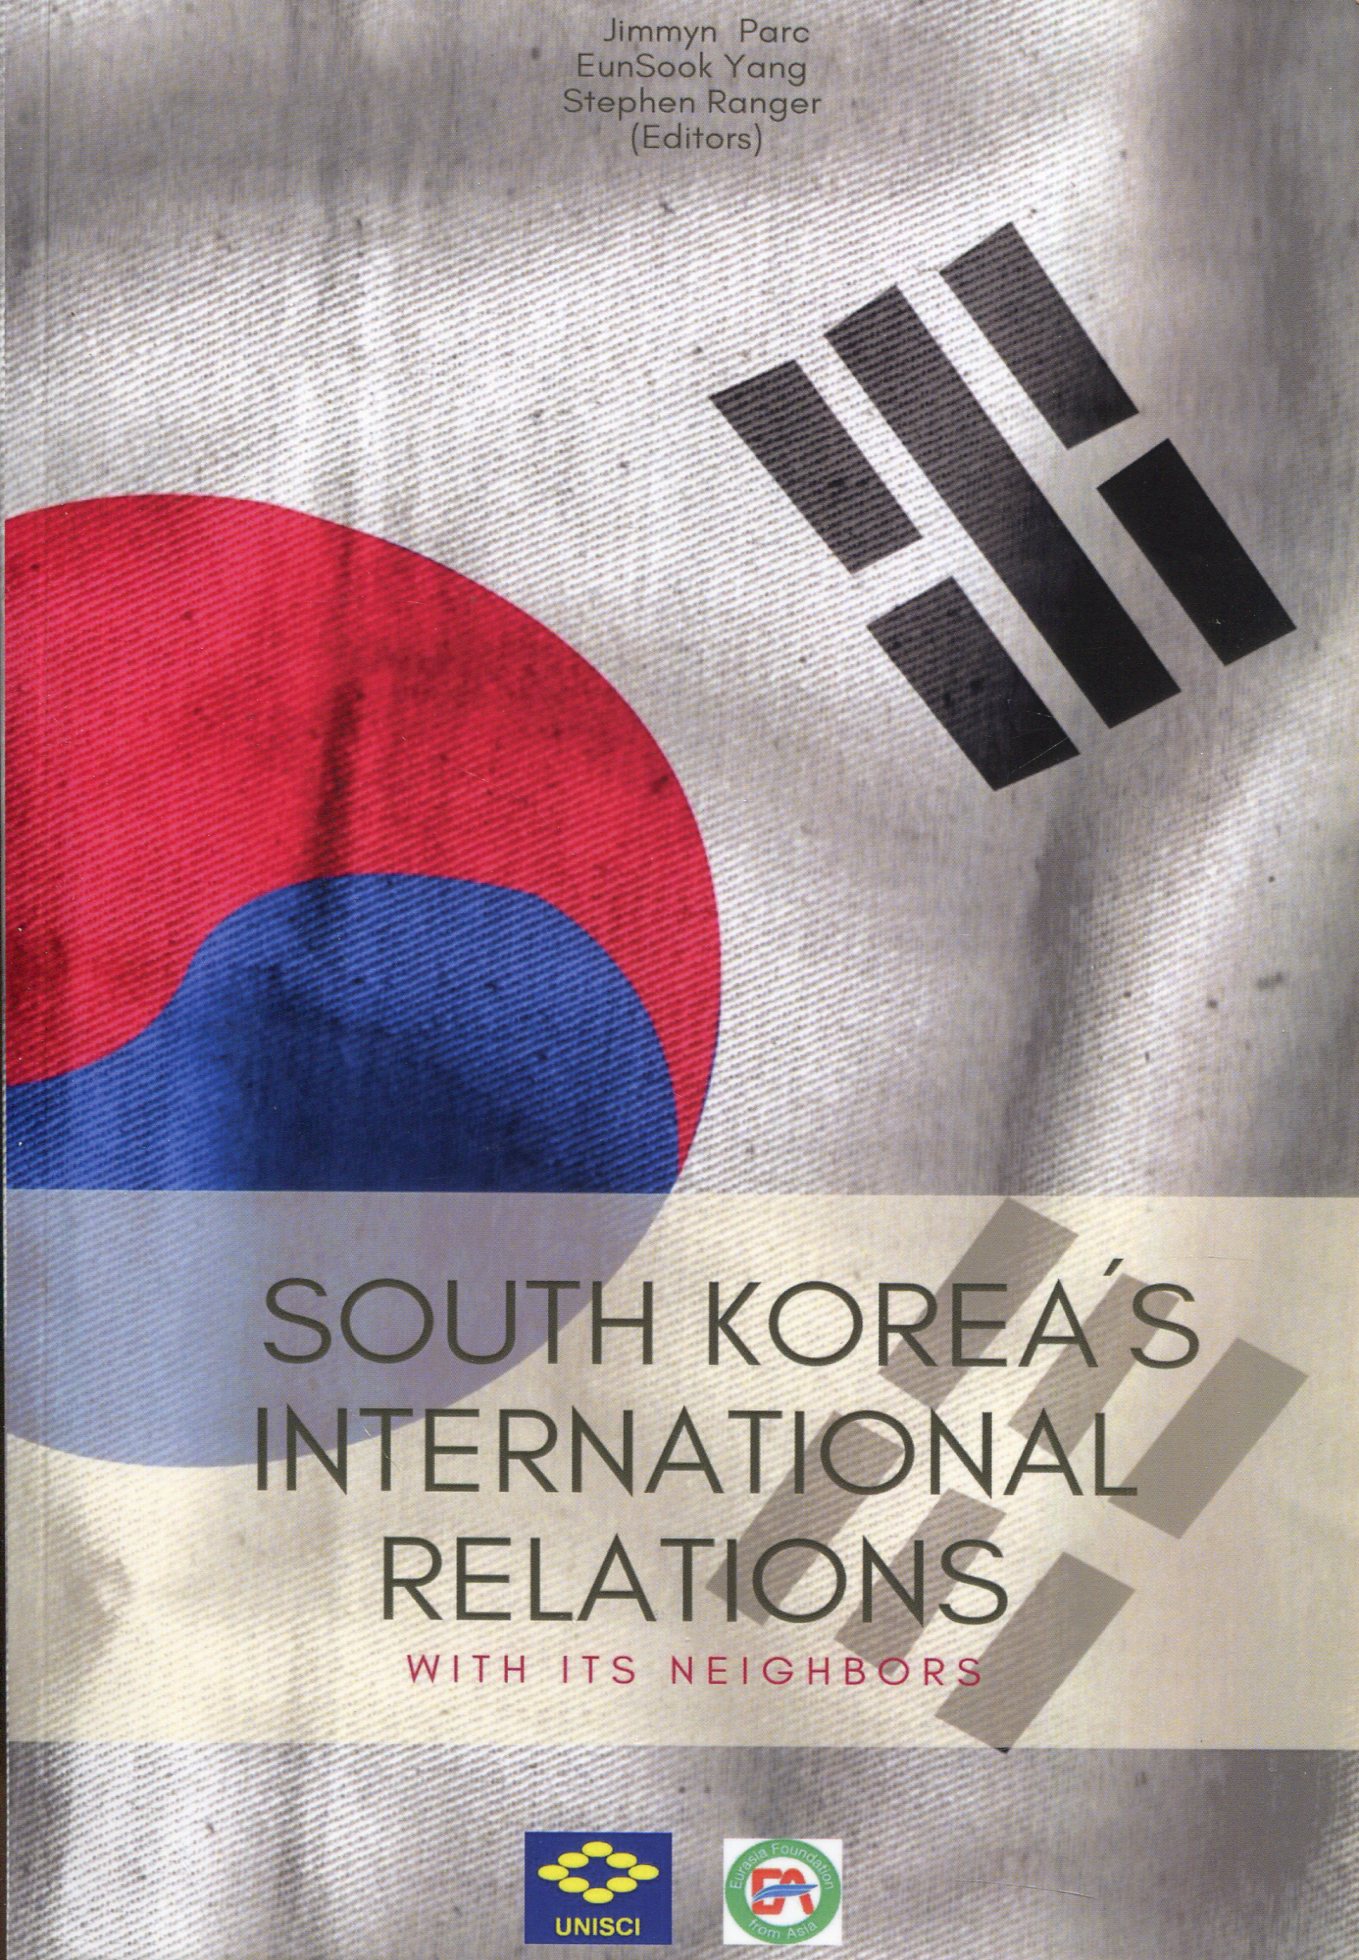 South Korea's international relations